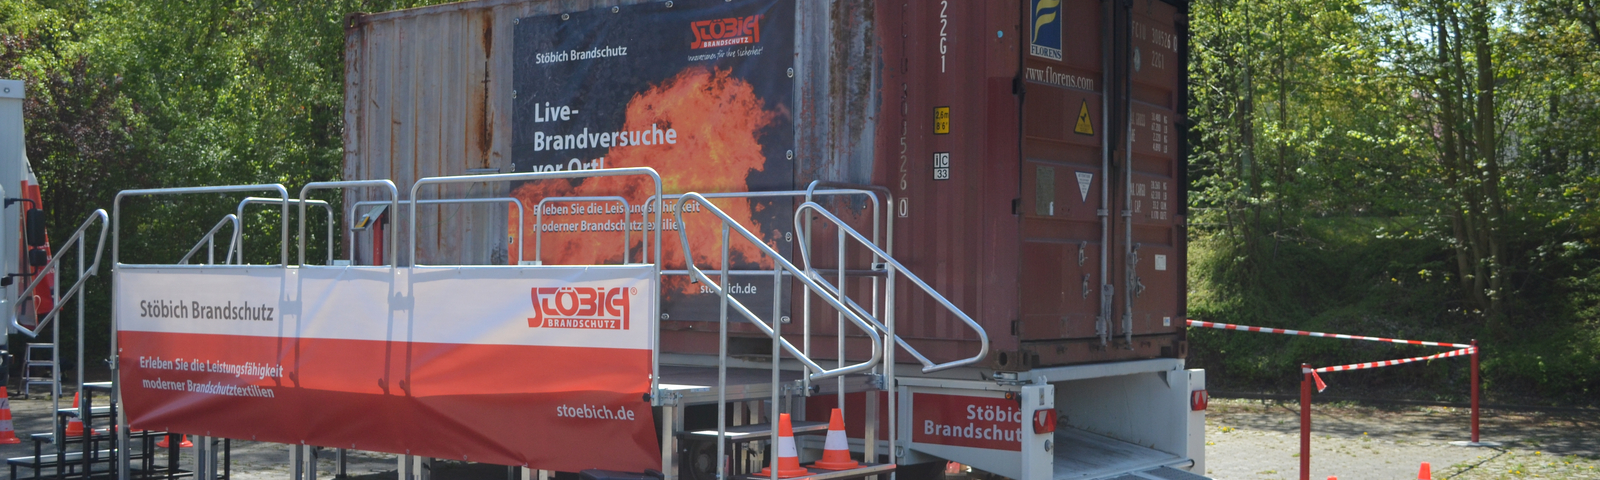 Live-Brandversuch in Goslar